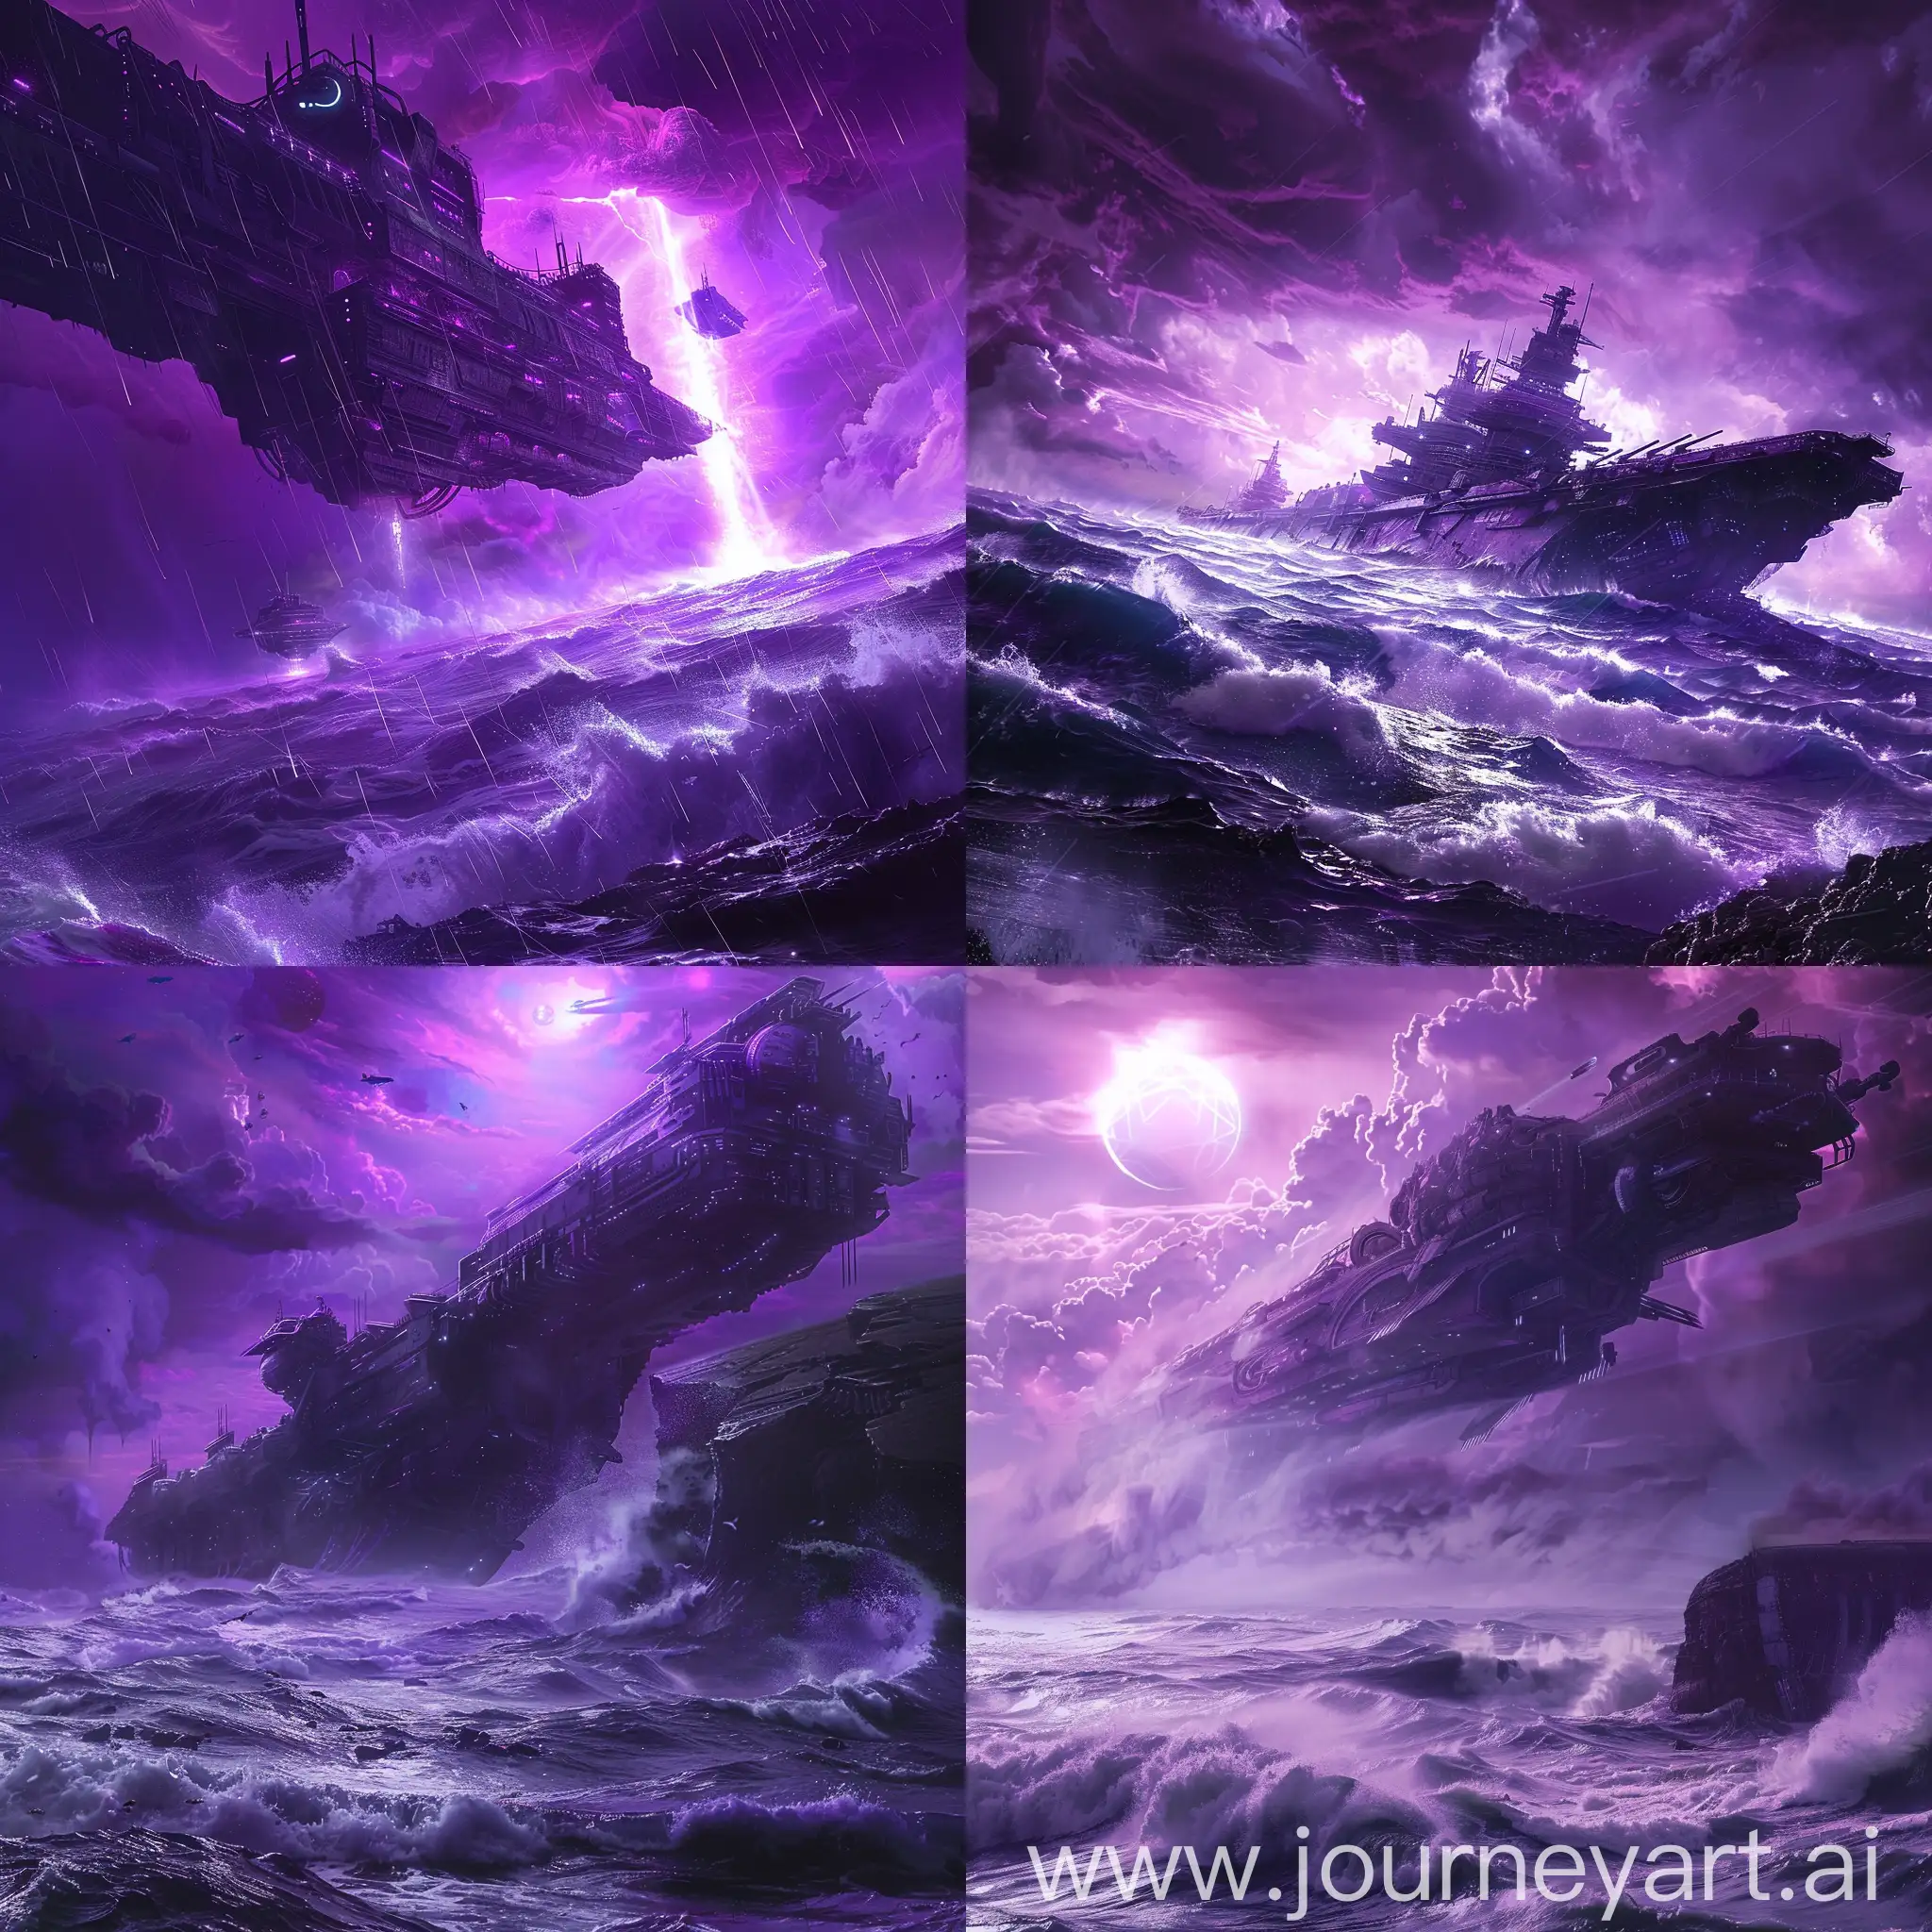 Otherworldly-Ship-on-Violet-Skyline-amidst-Tumultuous-Ocean